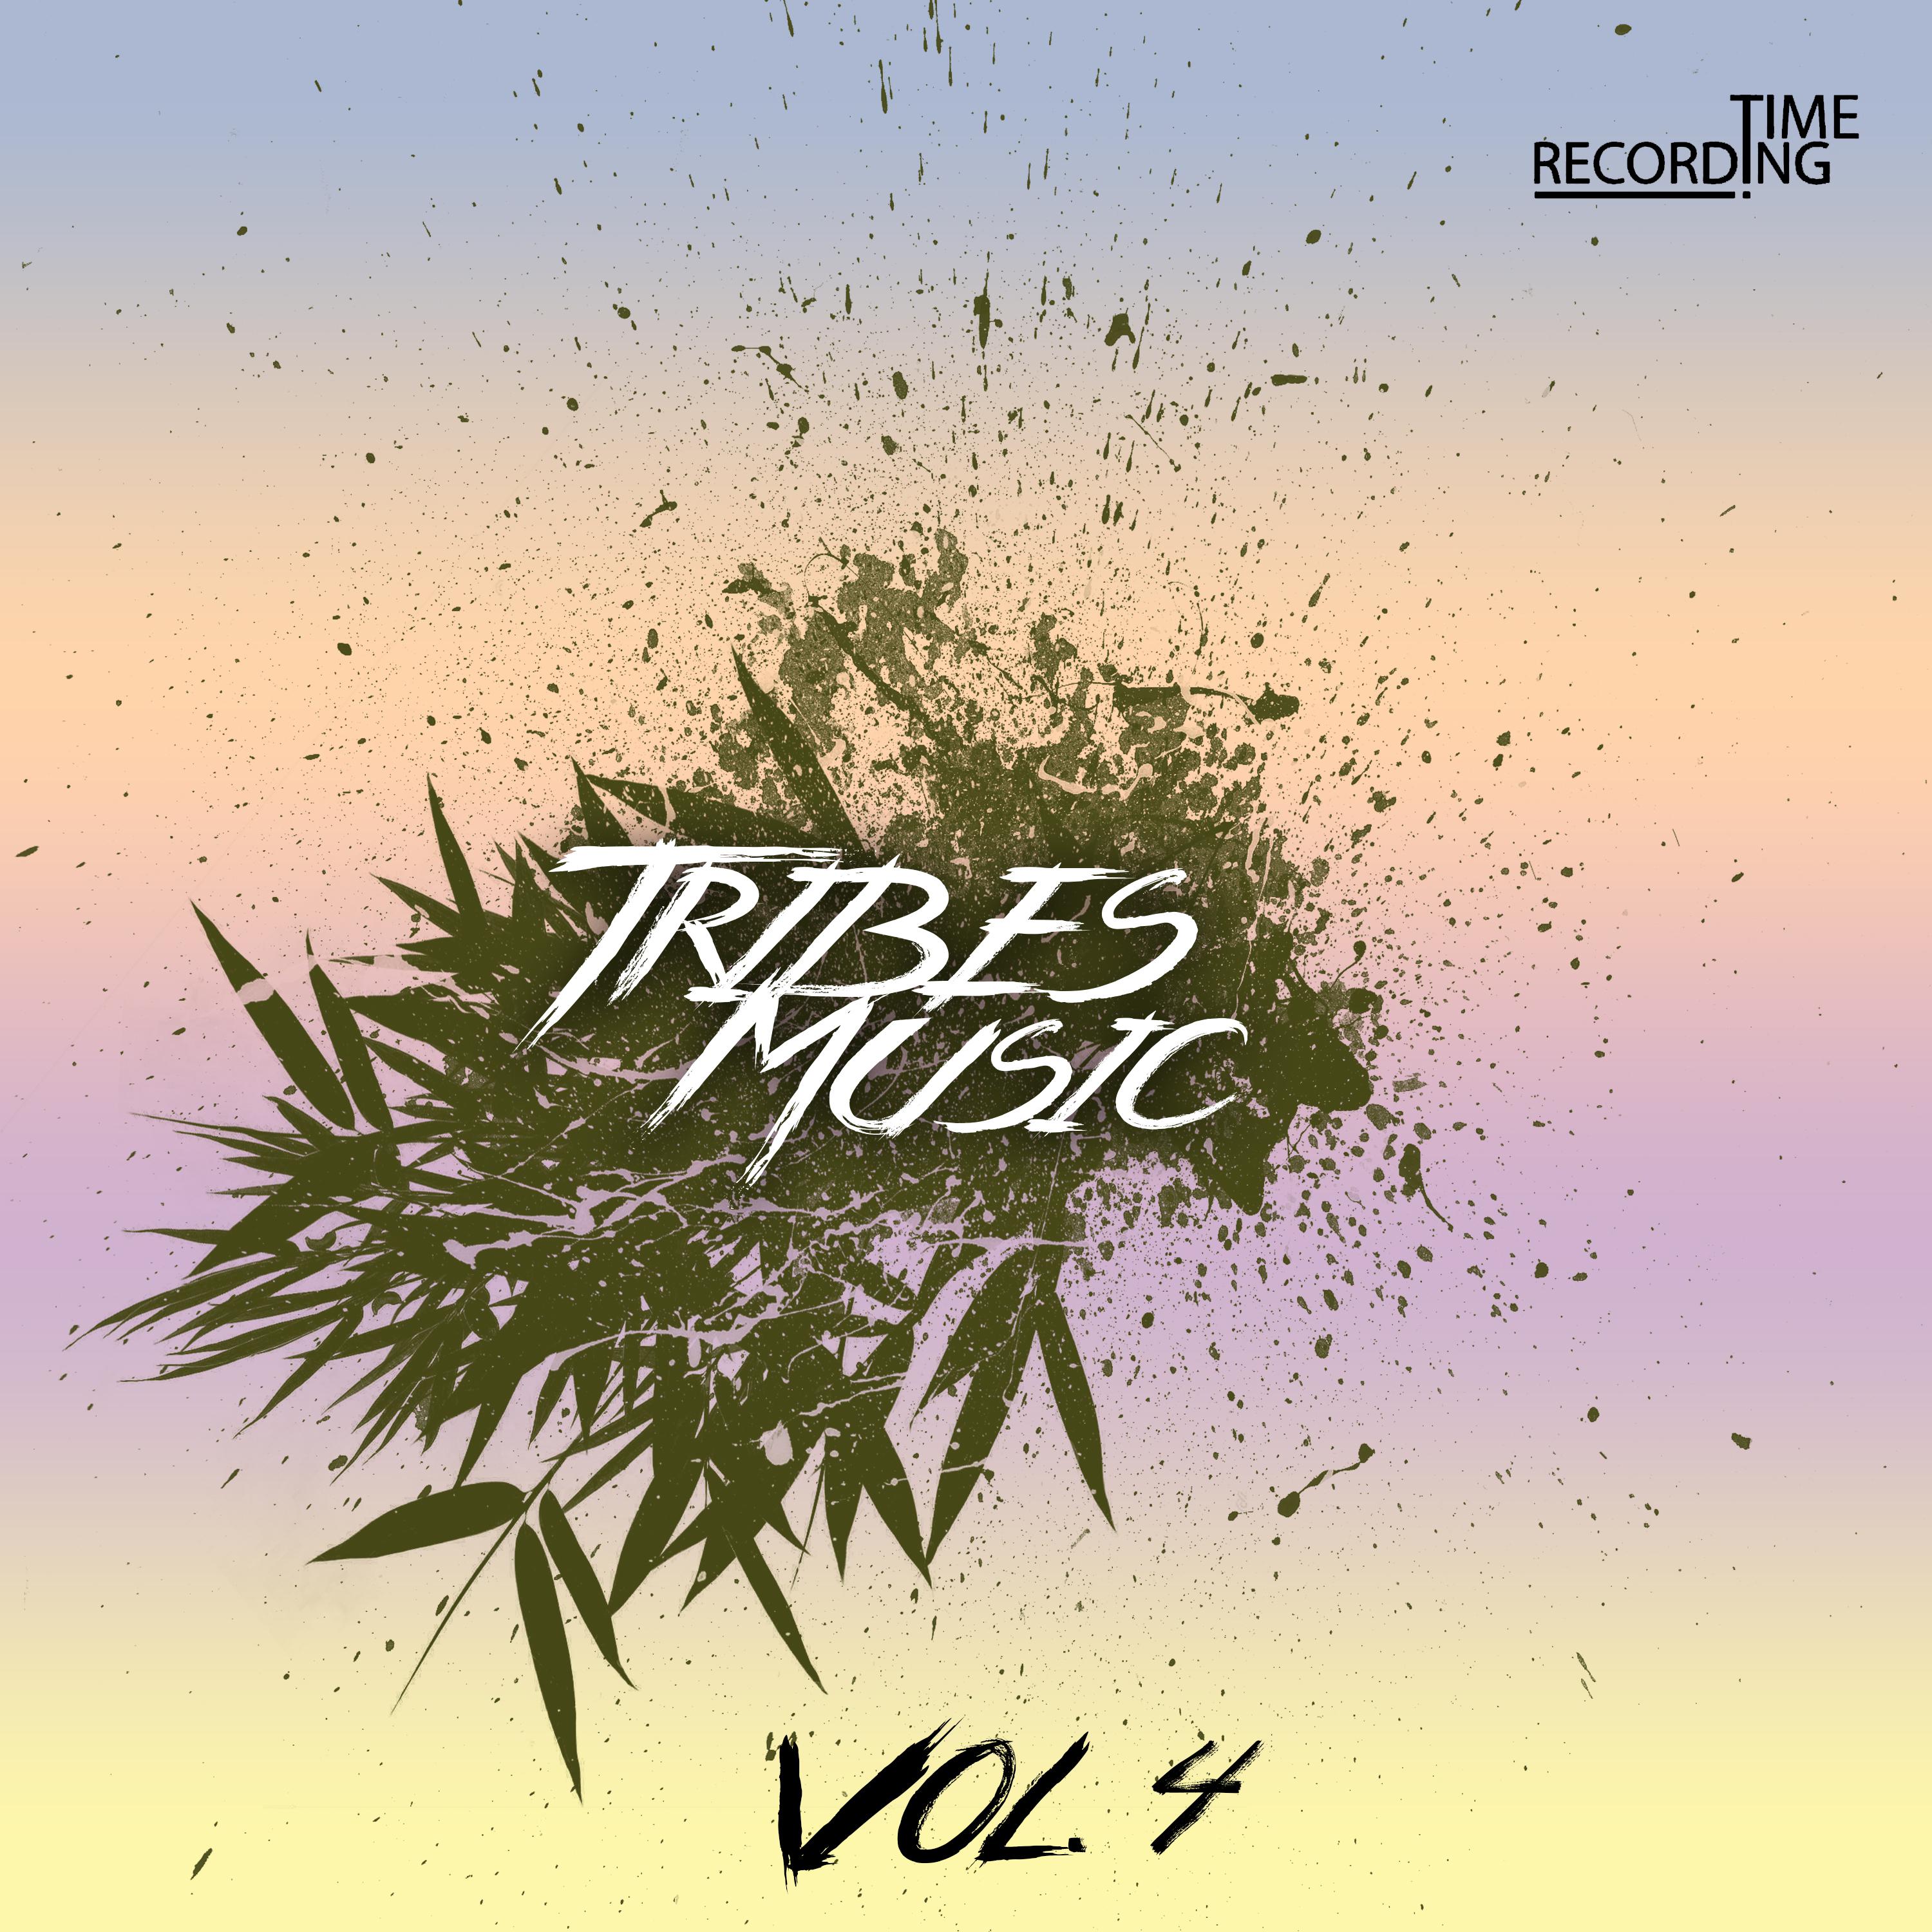 Tribes Music Vol. 4